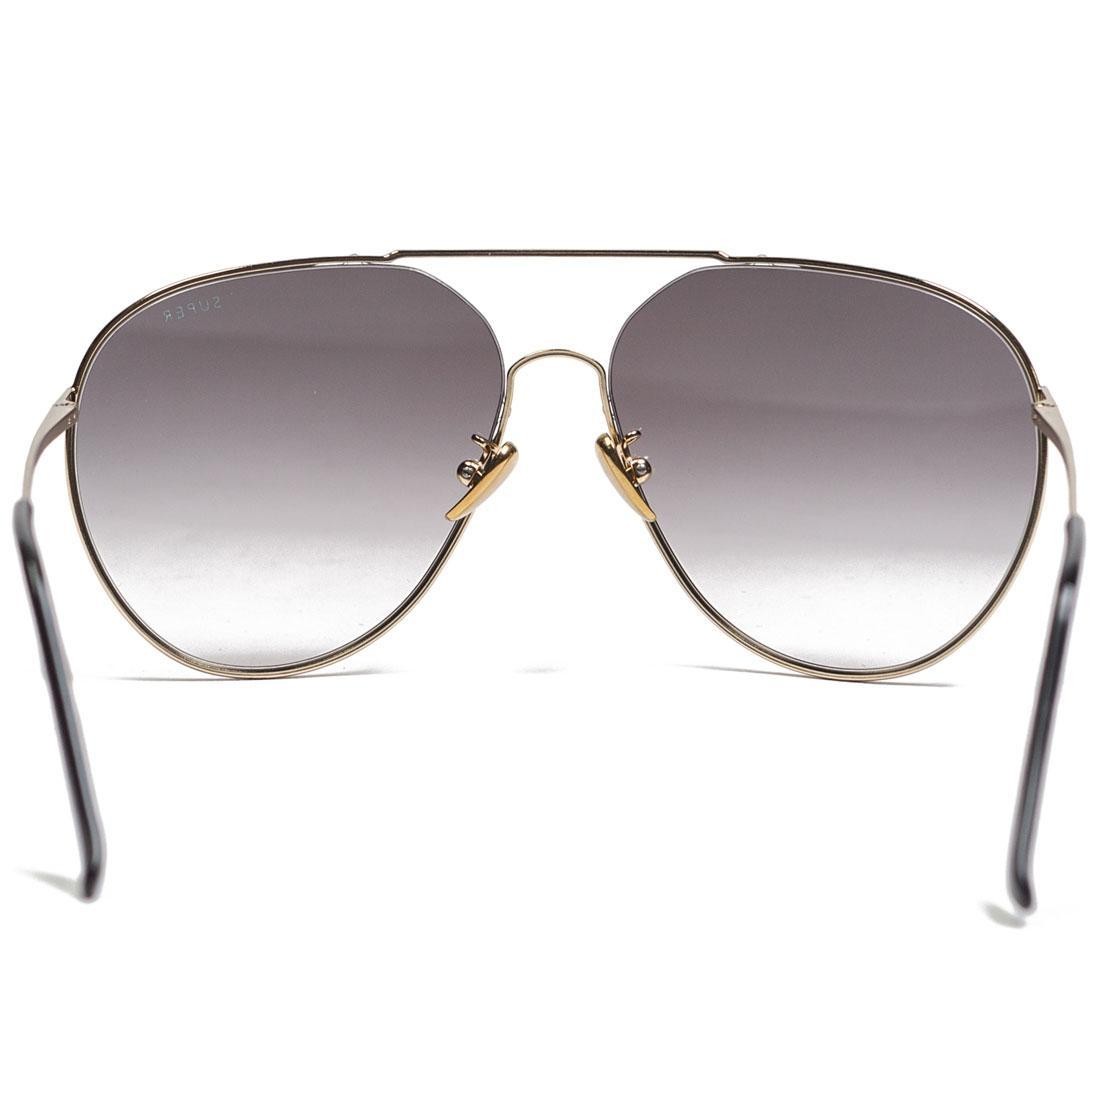 Rimo G1 round-frame Natural sunglasses